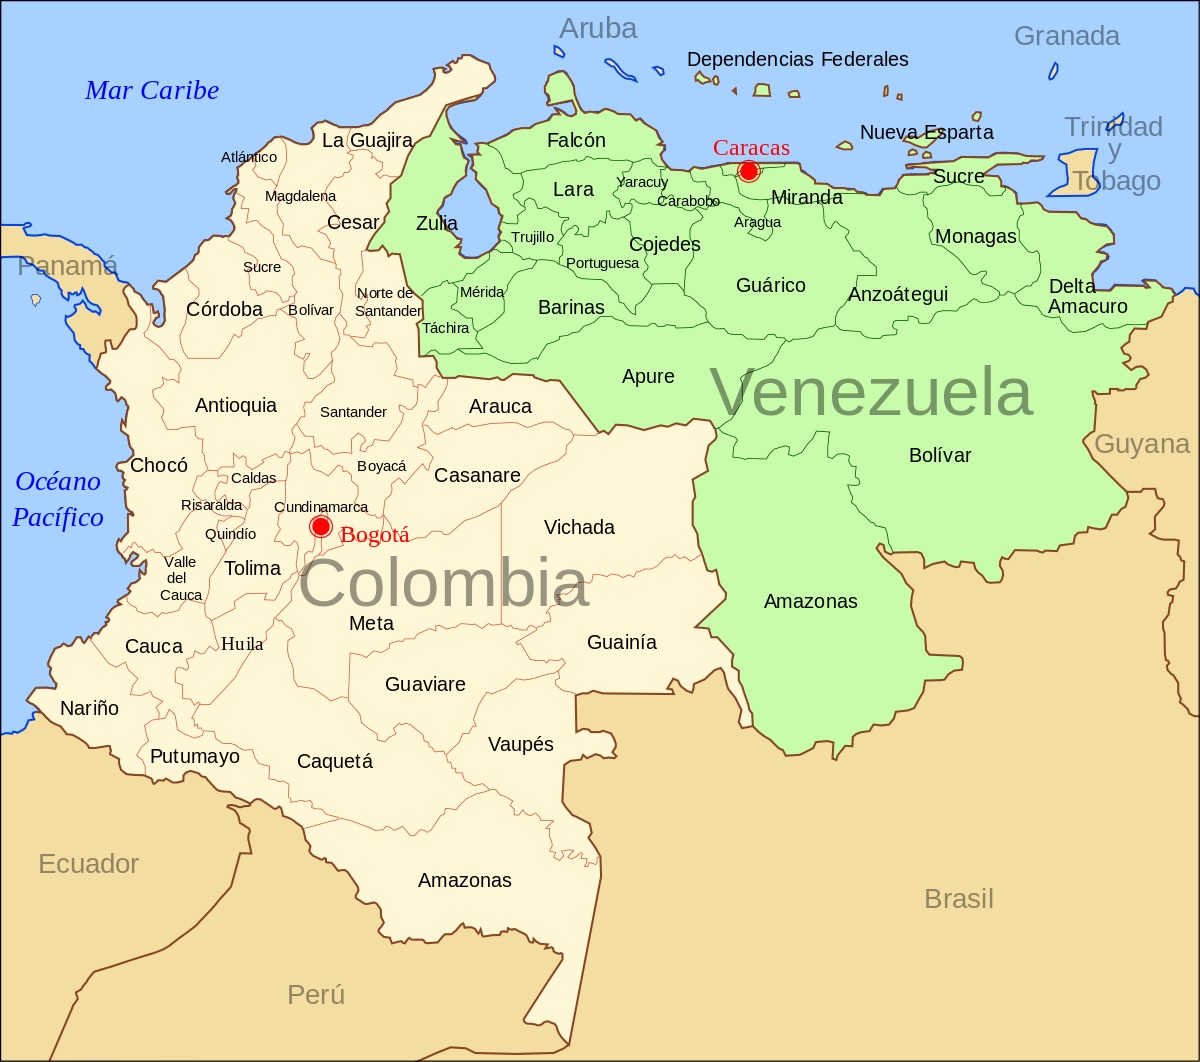 Venezuela and Colombia share a 2,219-kilometer border, closed since 2015.